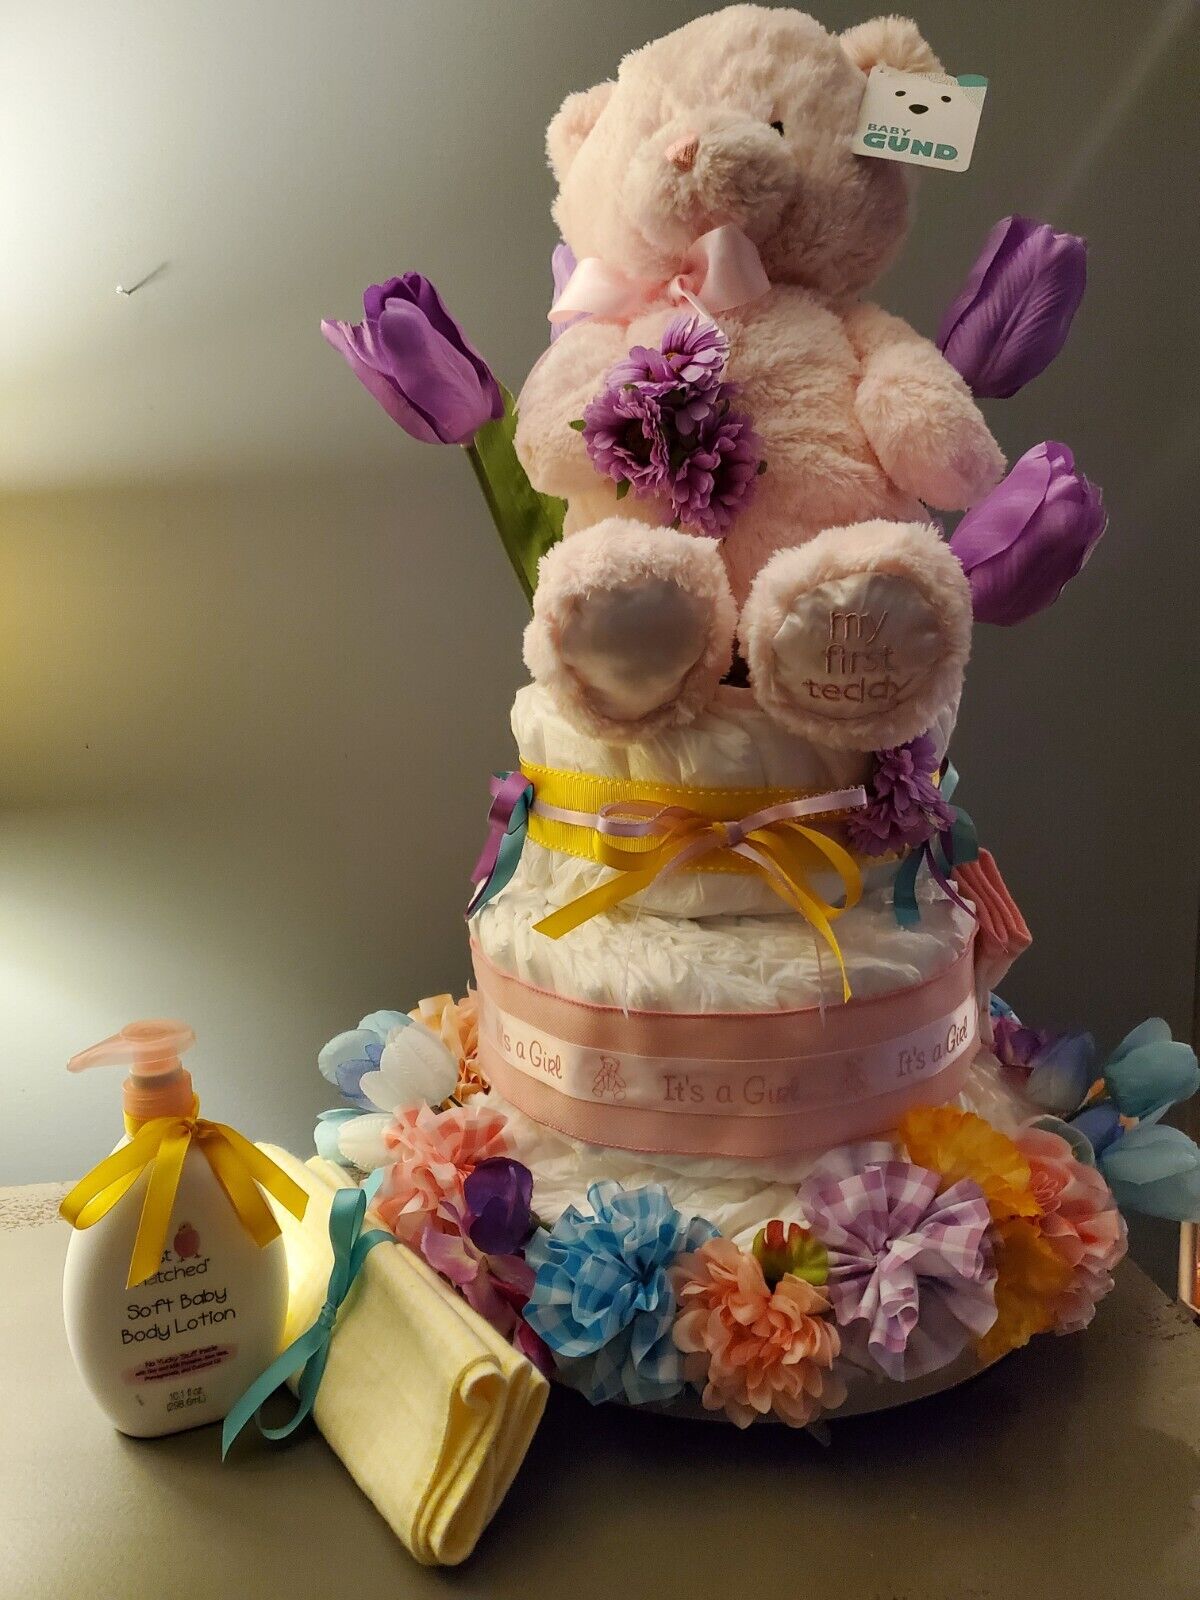 Teddy's Gingham & Floral Girl's, 3-tier Diaper Cake. Very Spring/summer-like.